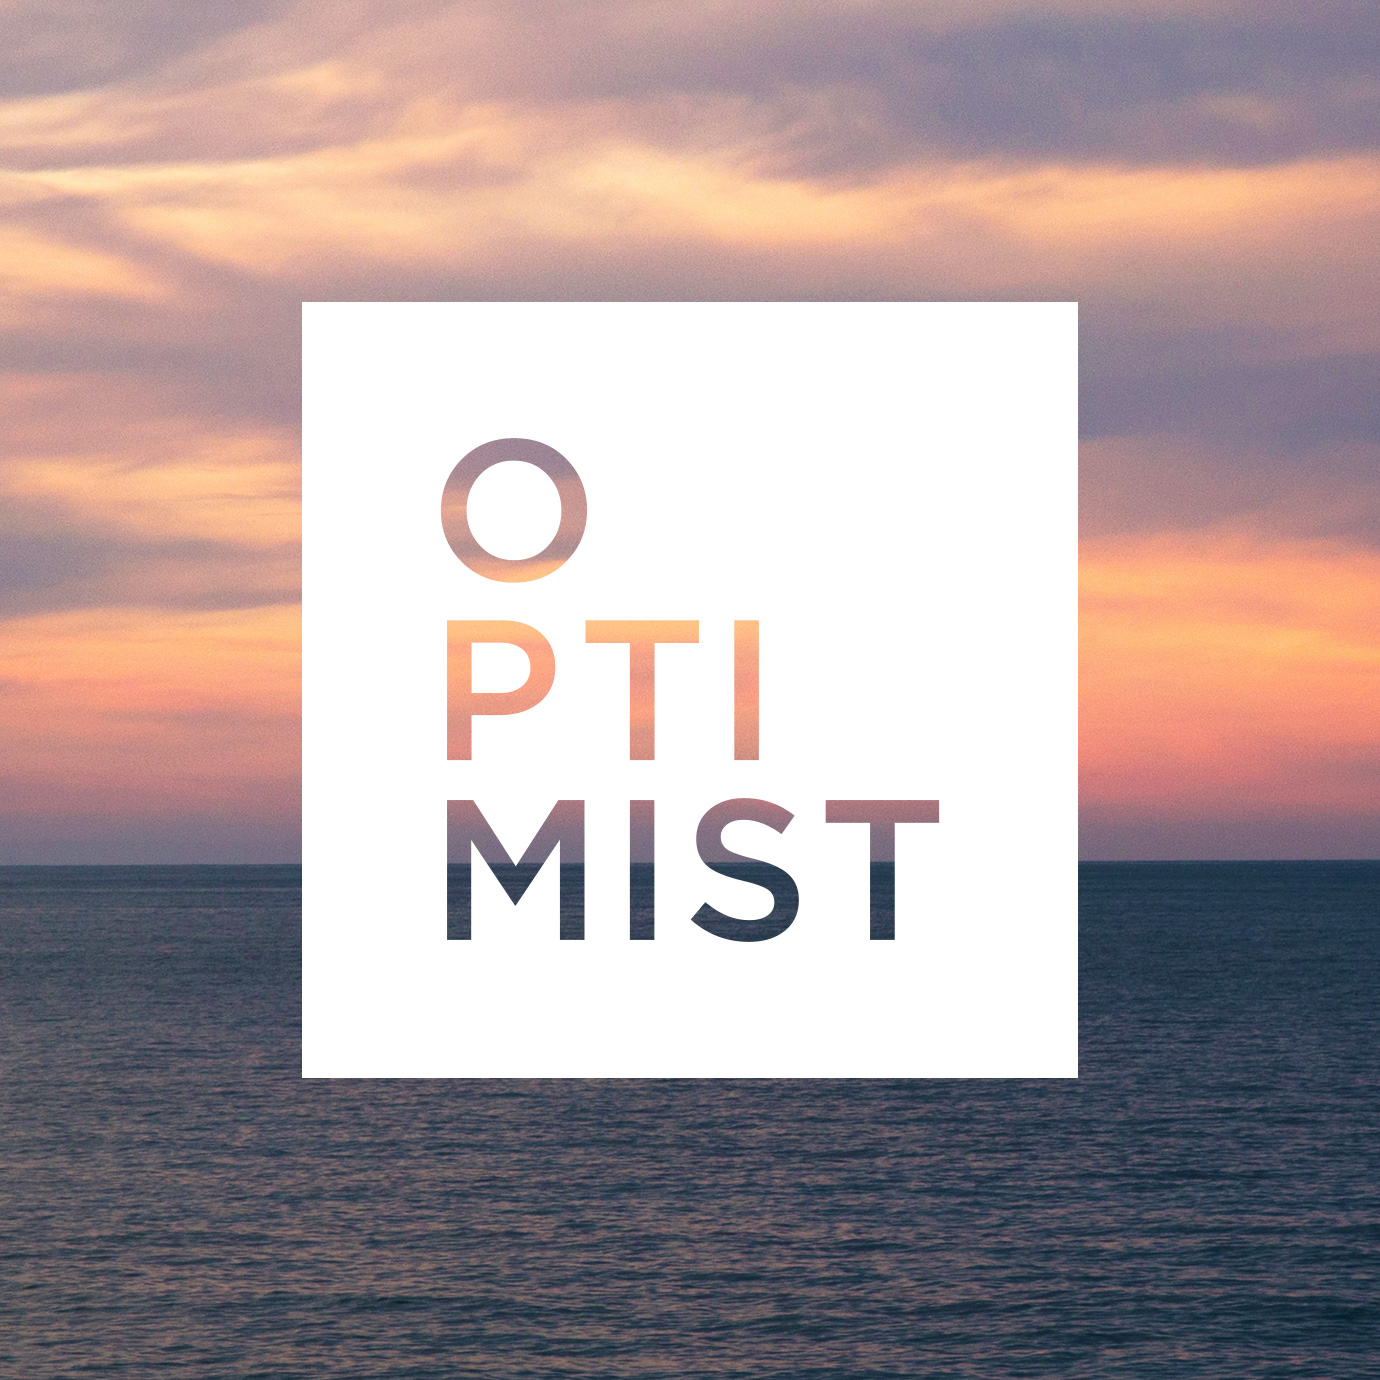 solid white optimist logo over ocean at sunset image